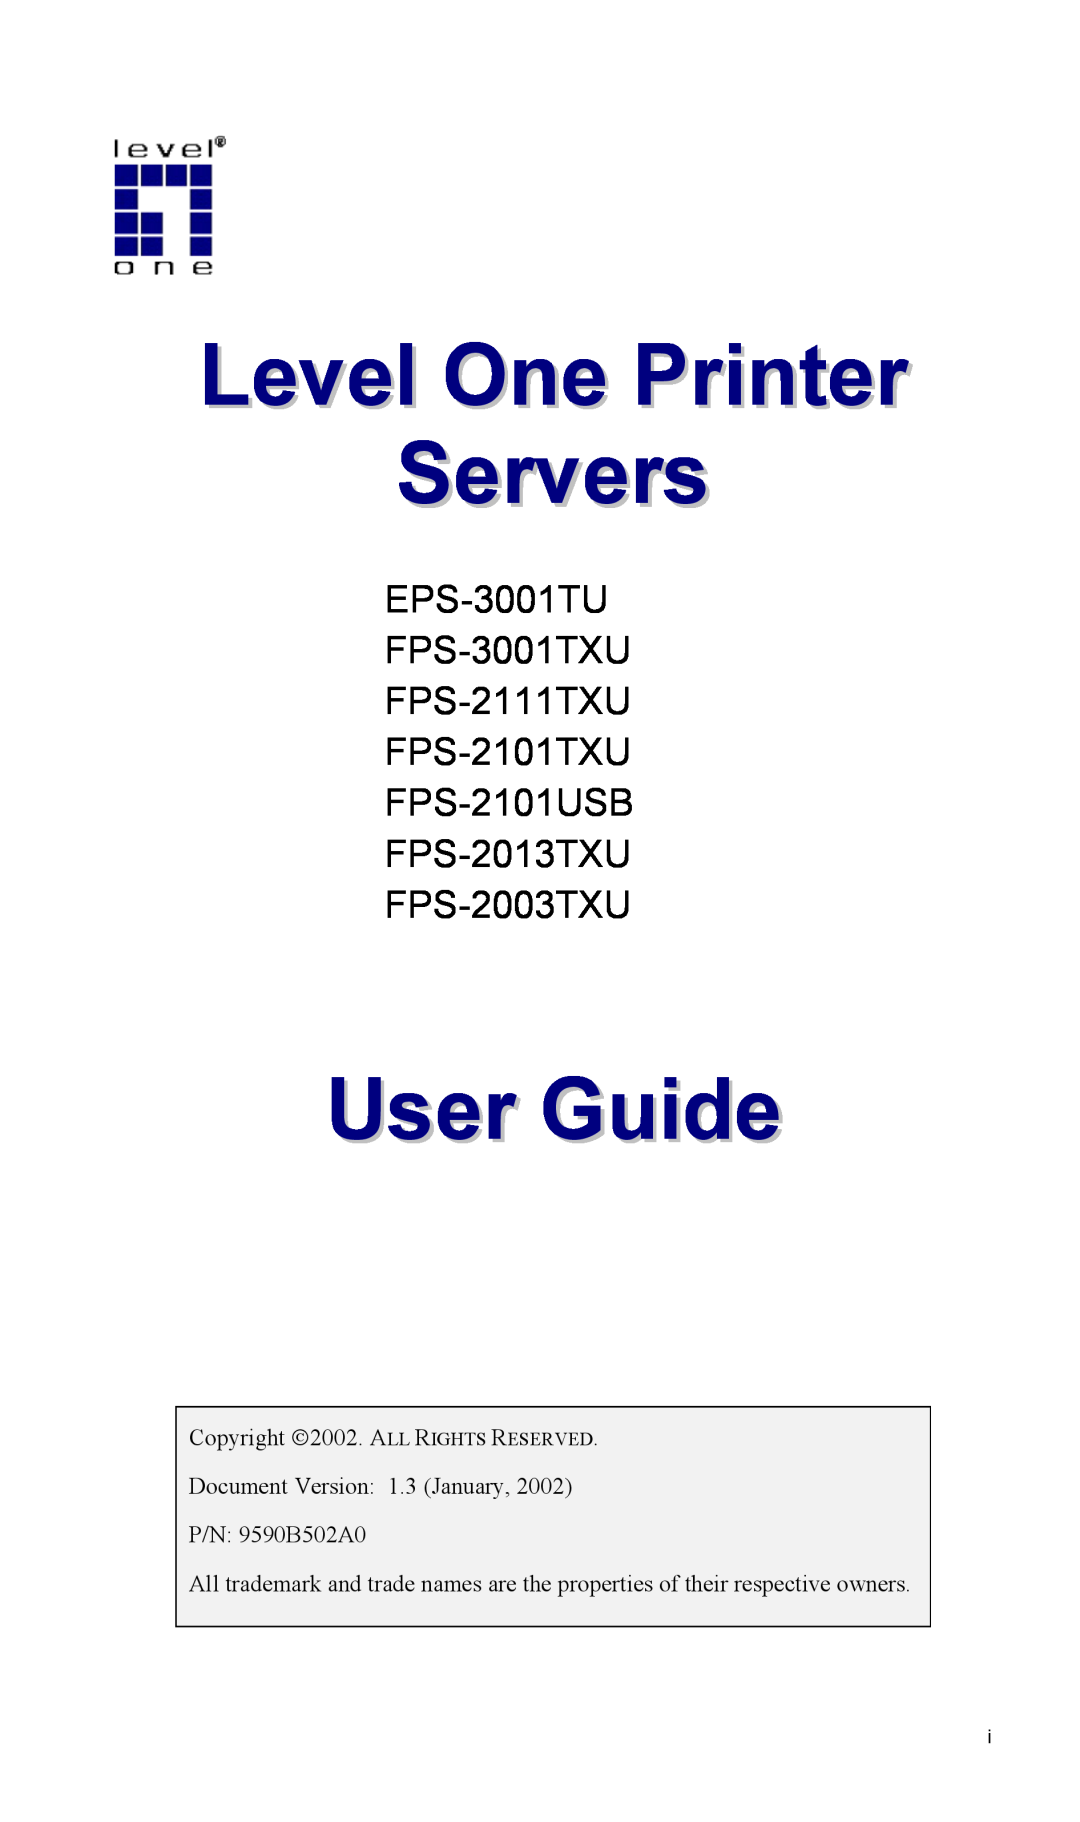 LevelOne FPS-2111TXU, FPS-2101USB, FPS-2101TXU manual Level One Printer Servers, User Guide, FPS-2013TXU FPS-2003TXU 